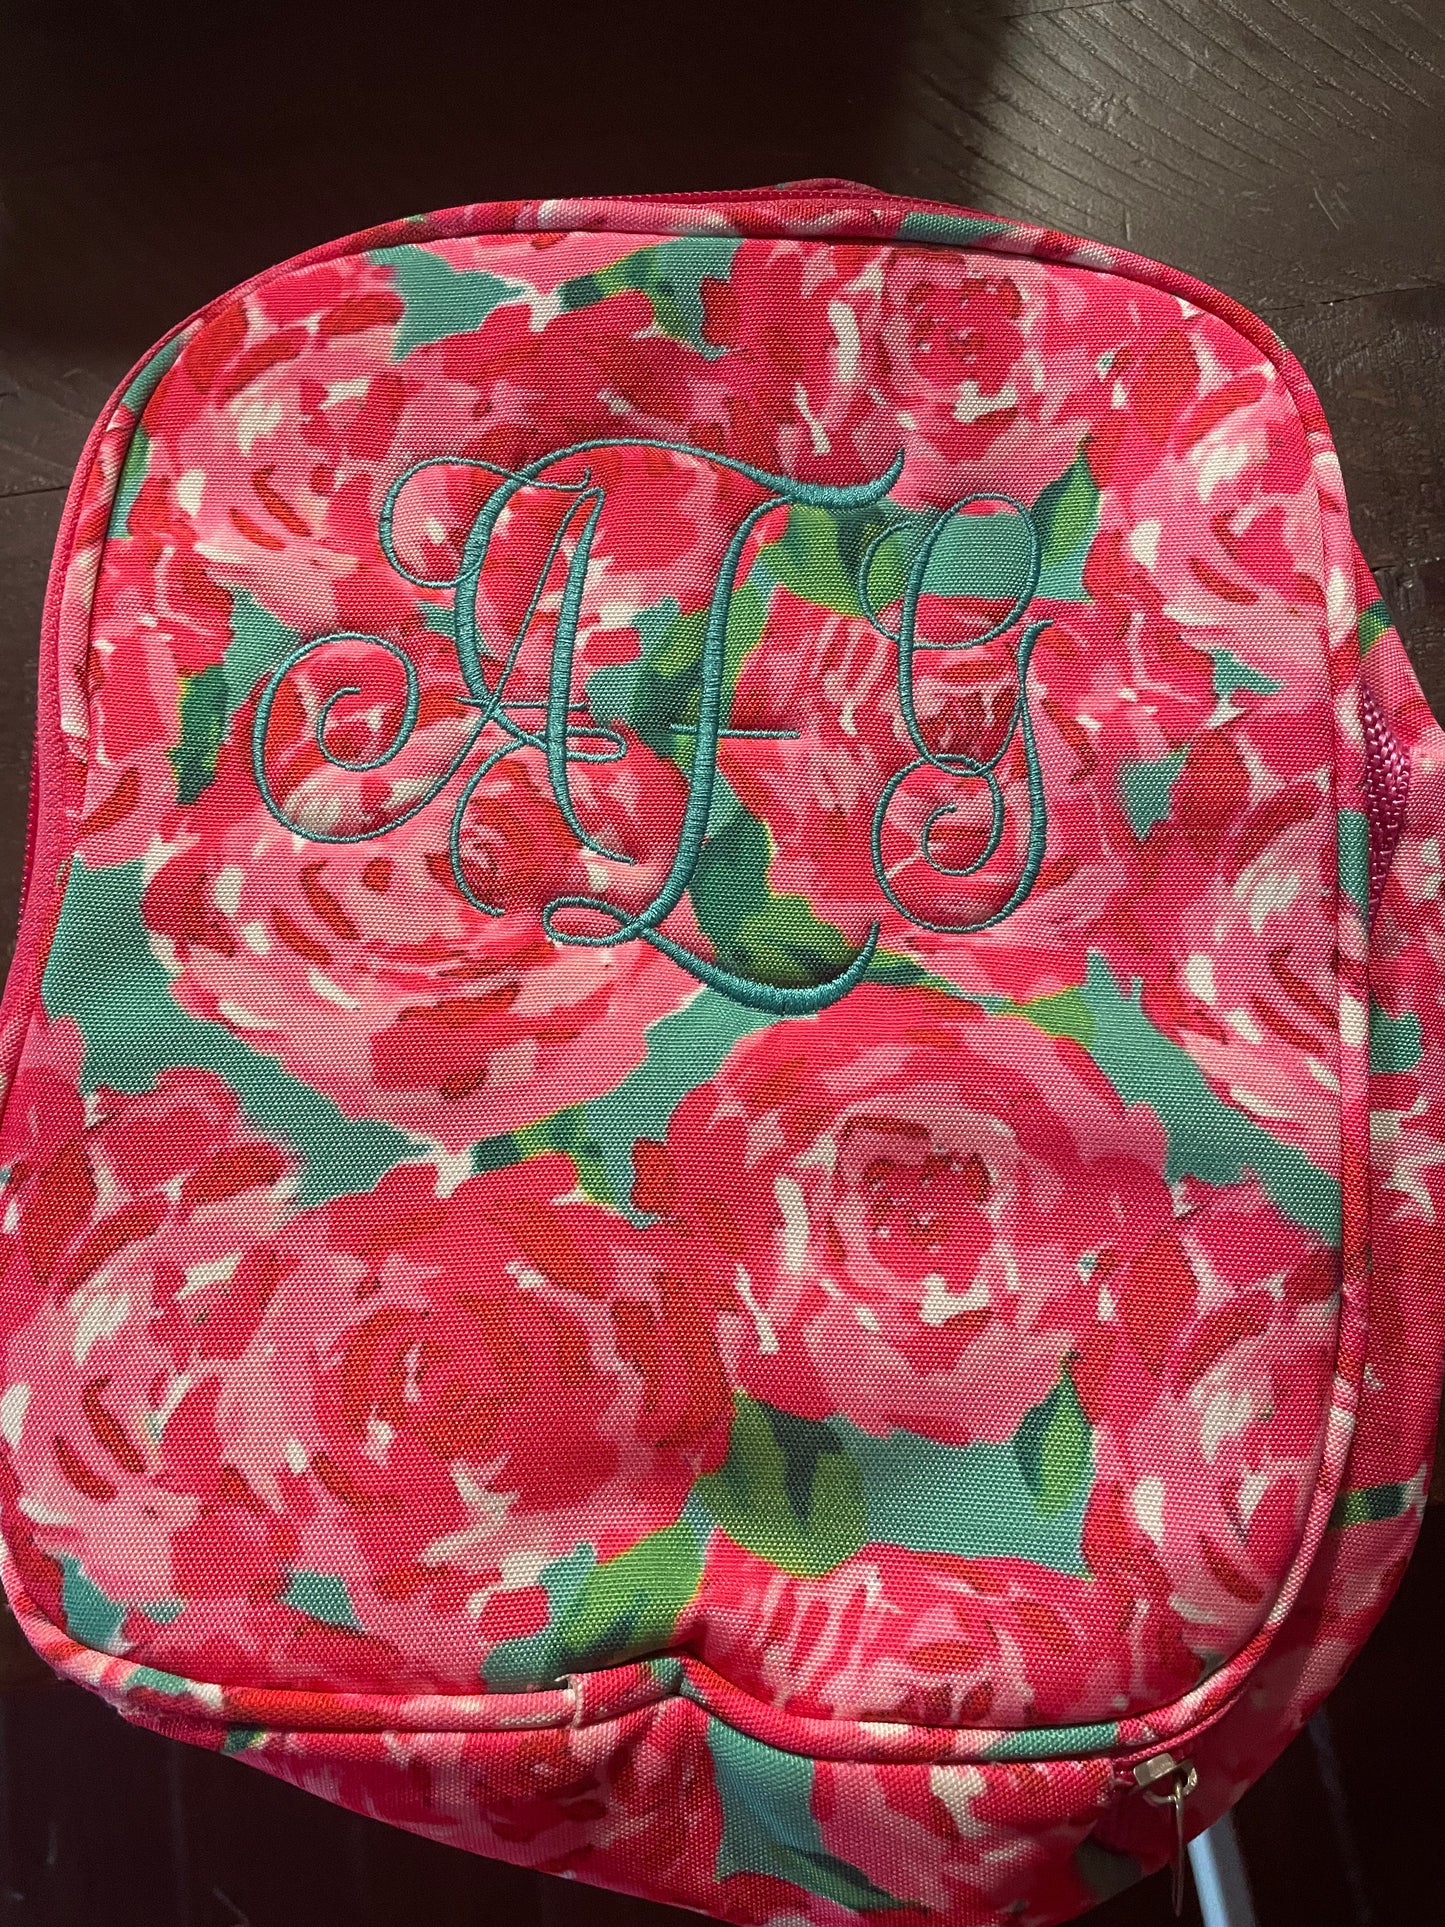 Rose print backpack/Back to School